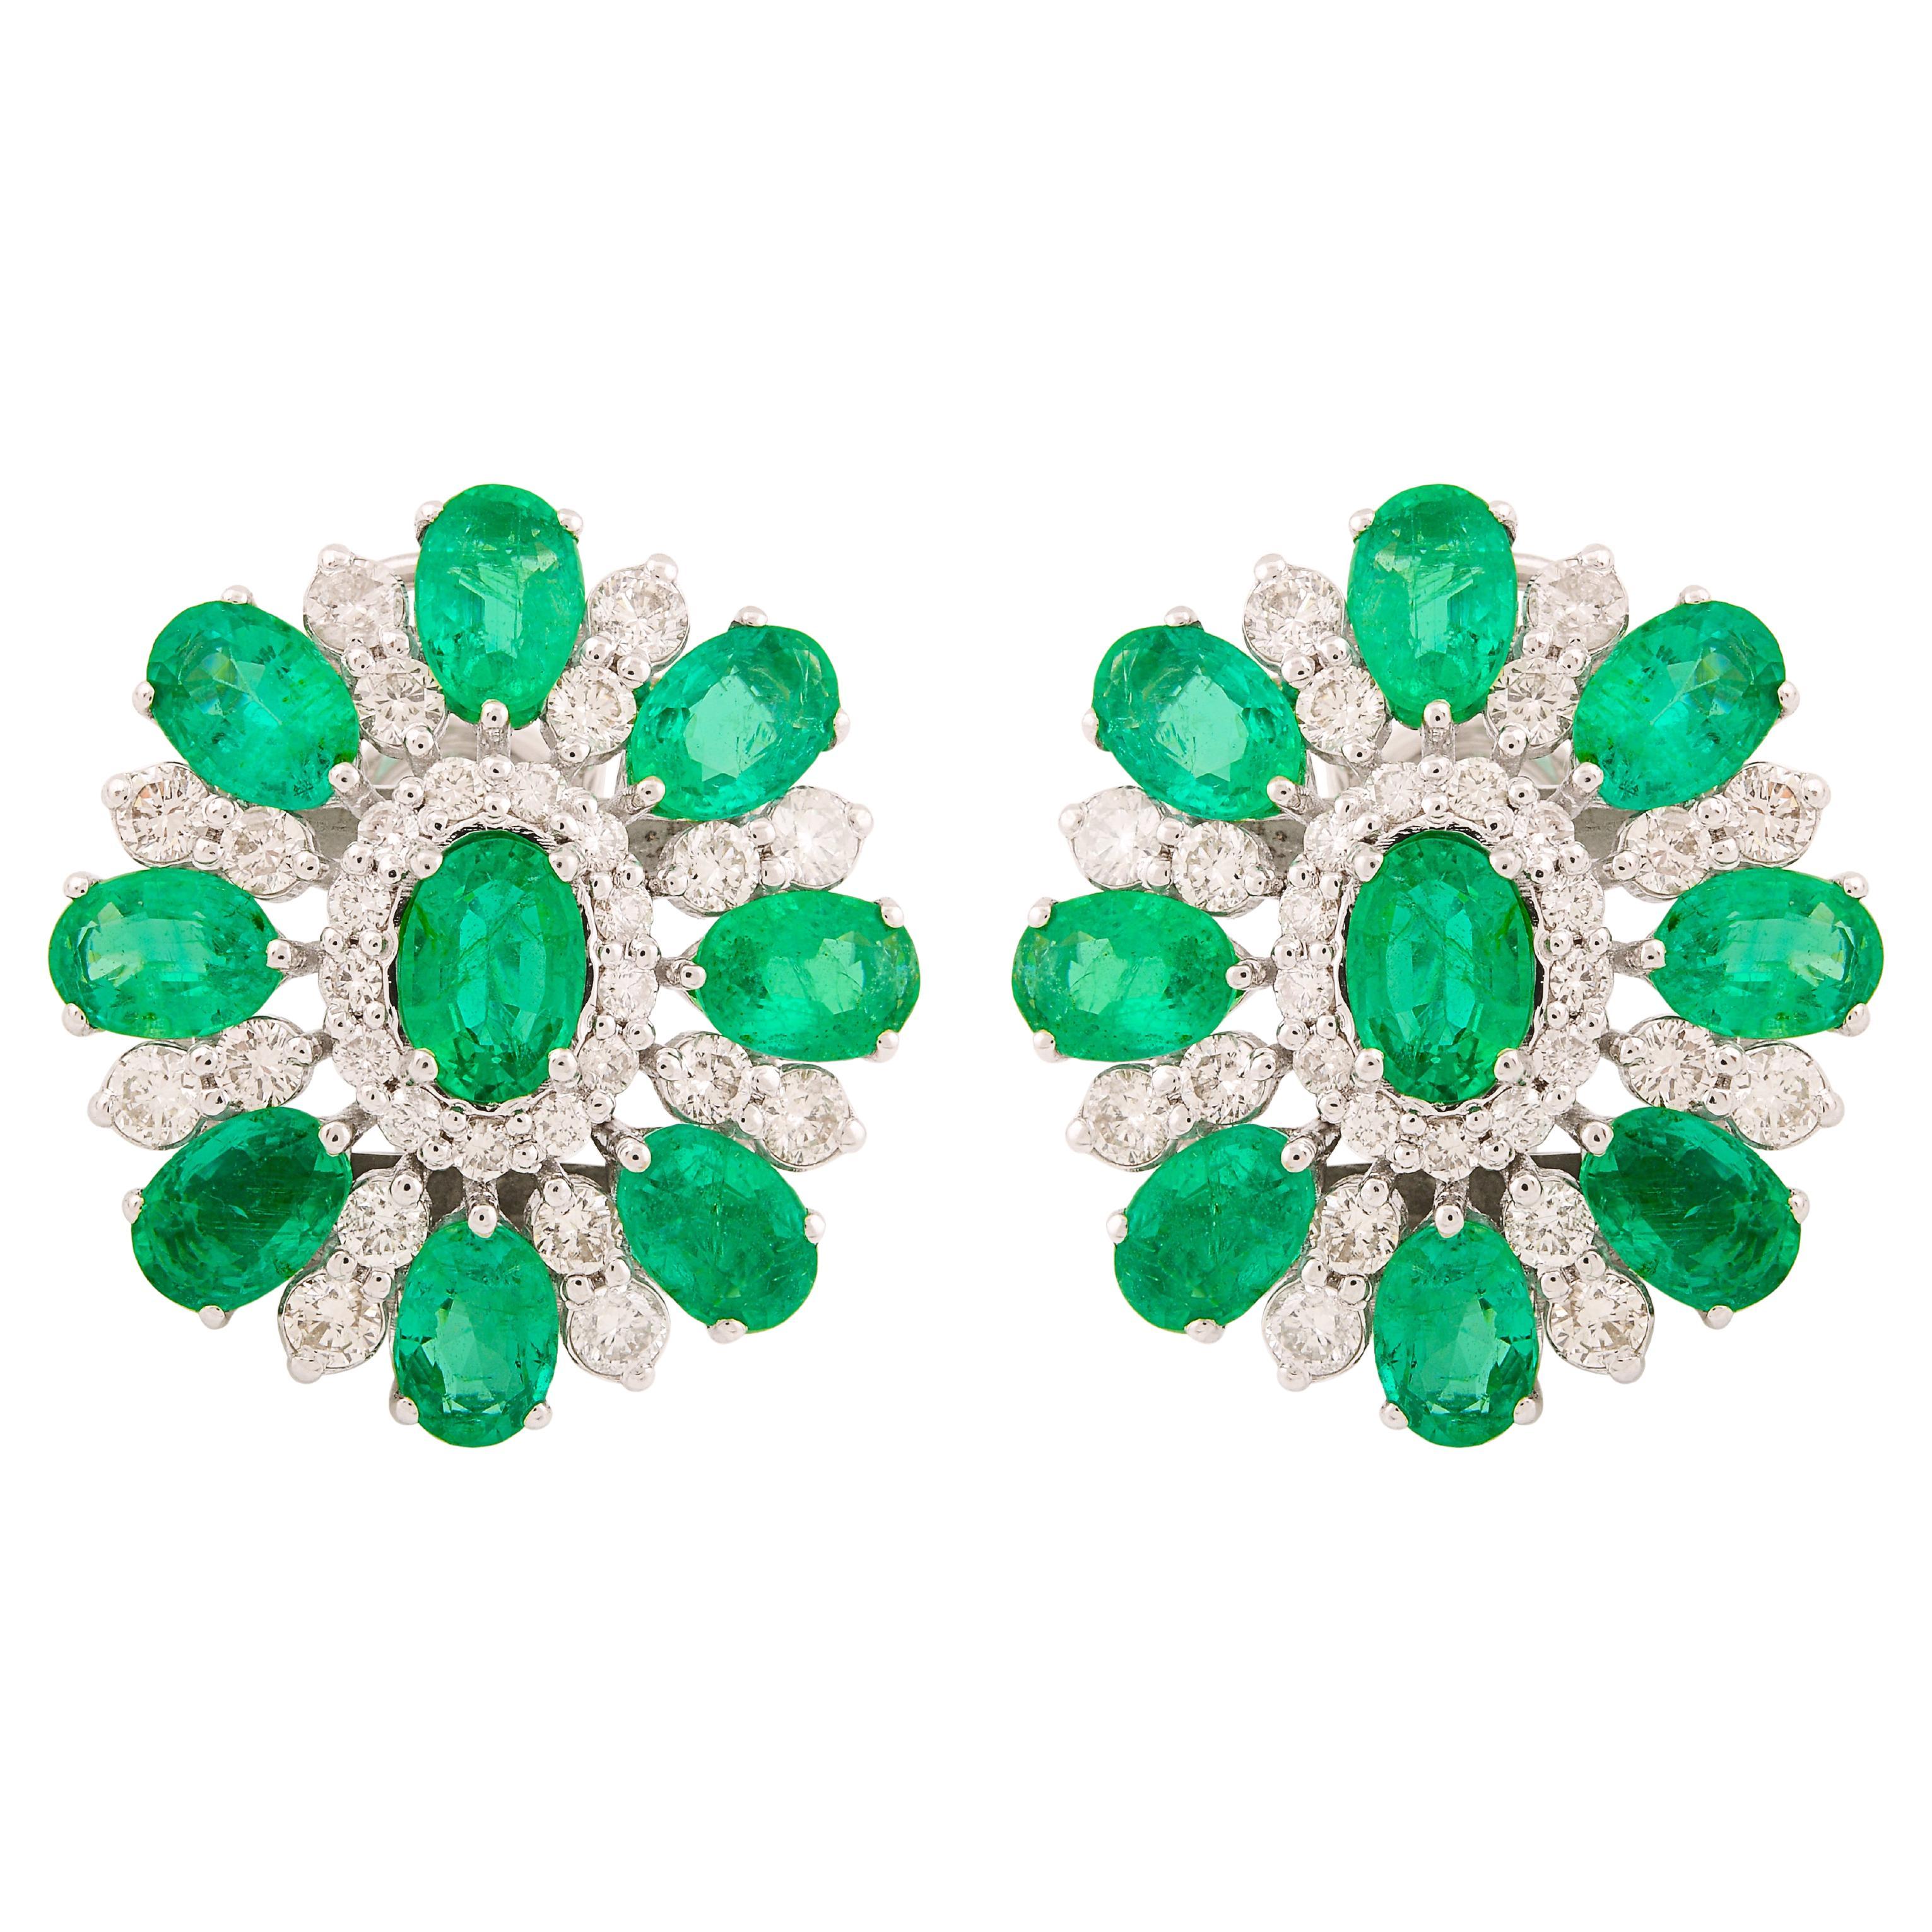 Oval Shape Natural Emerald Gemstone Flower Earrings 10 Karat White Gold Jewelry